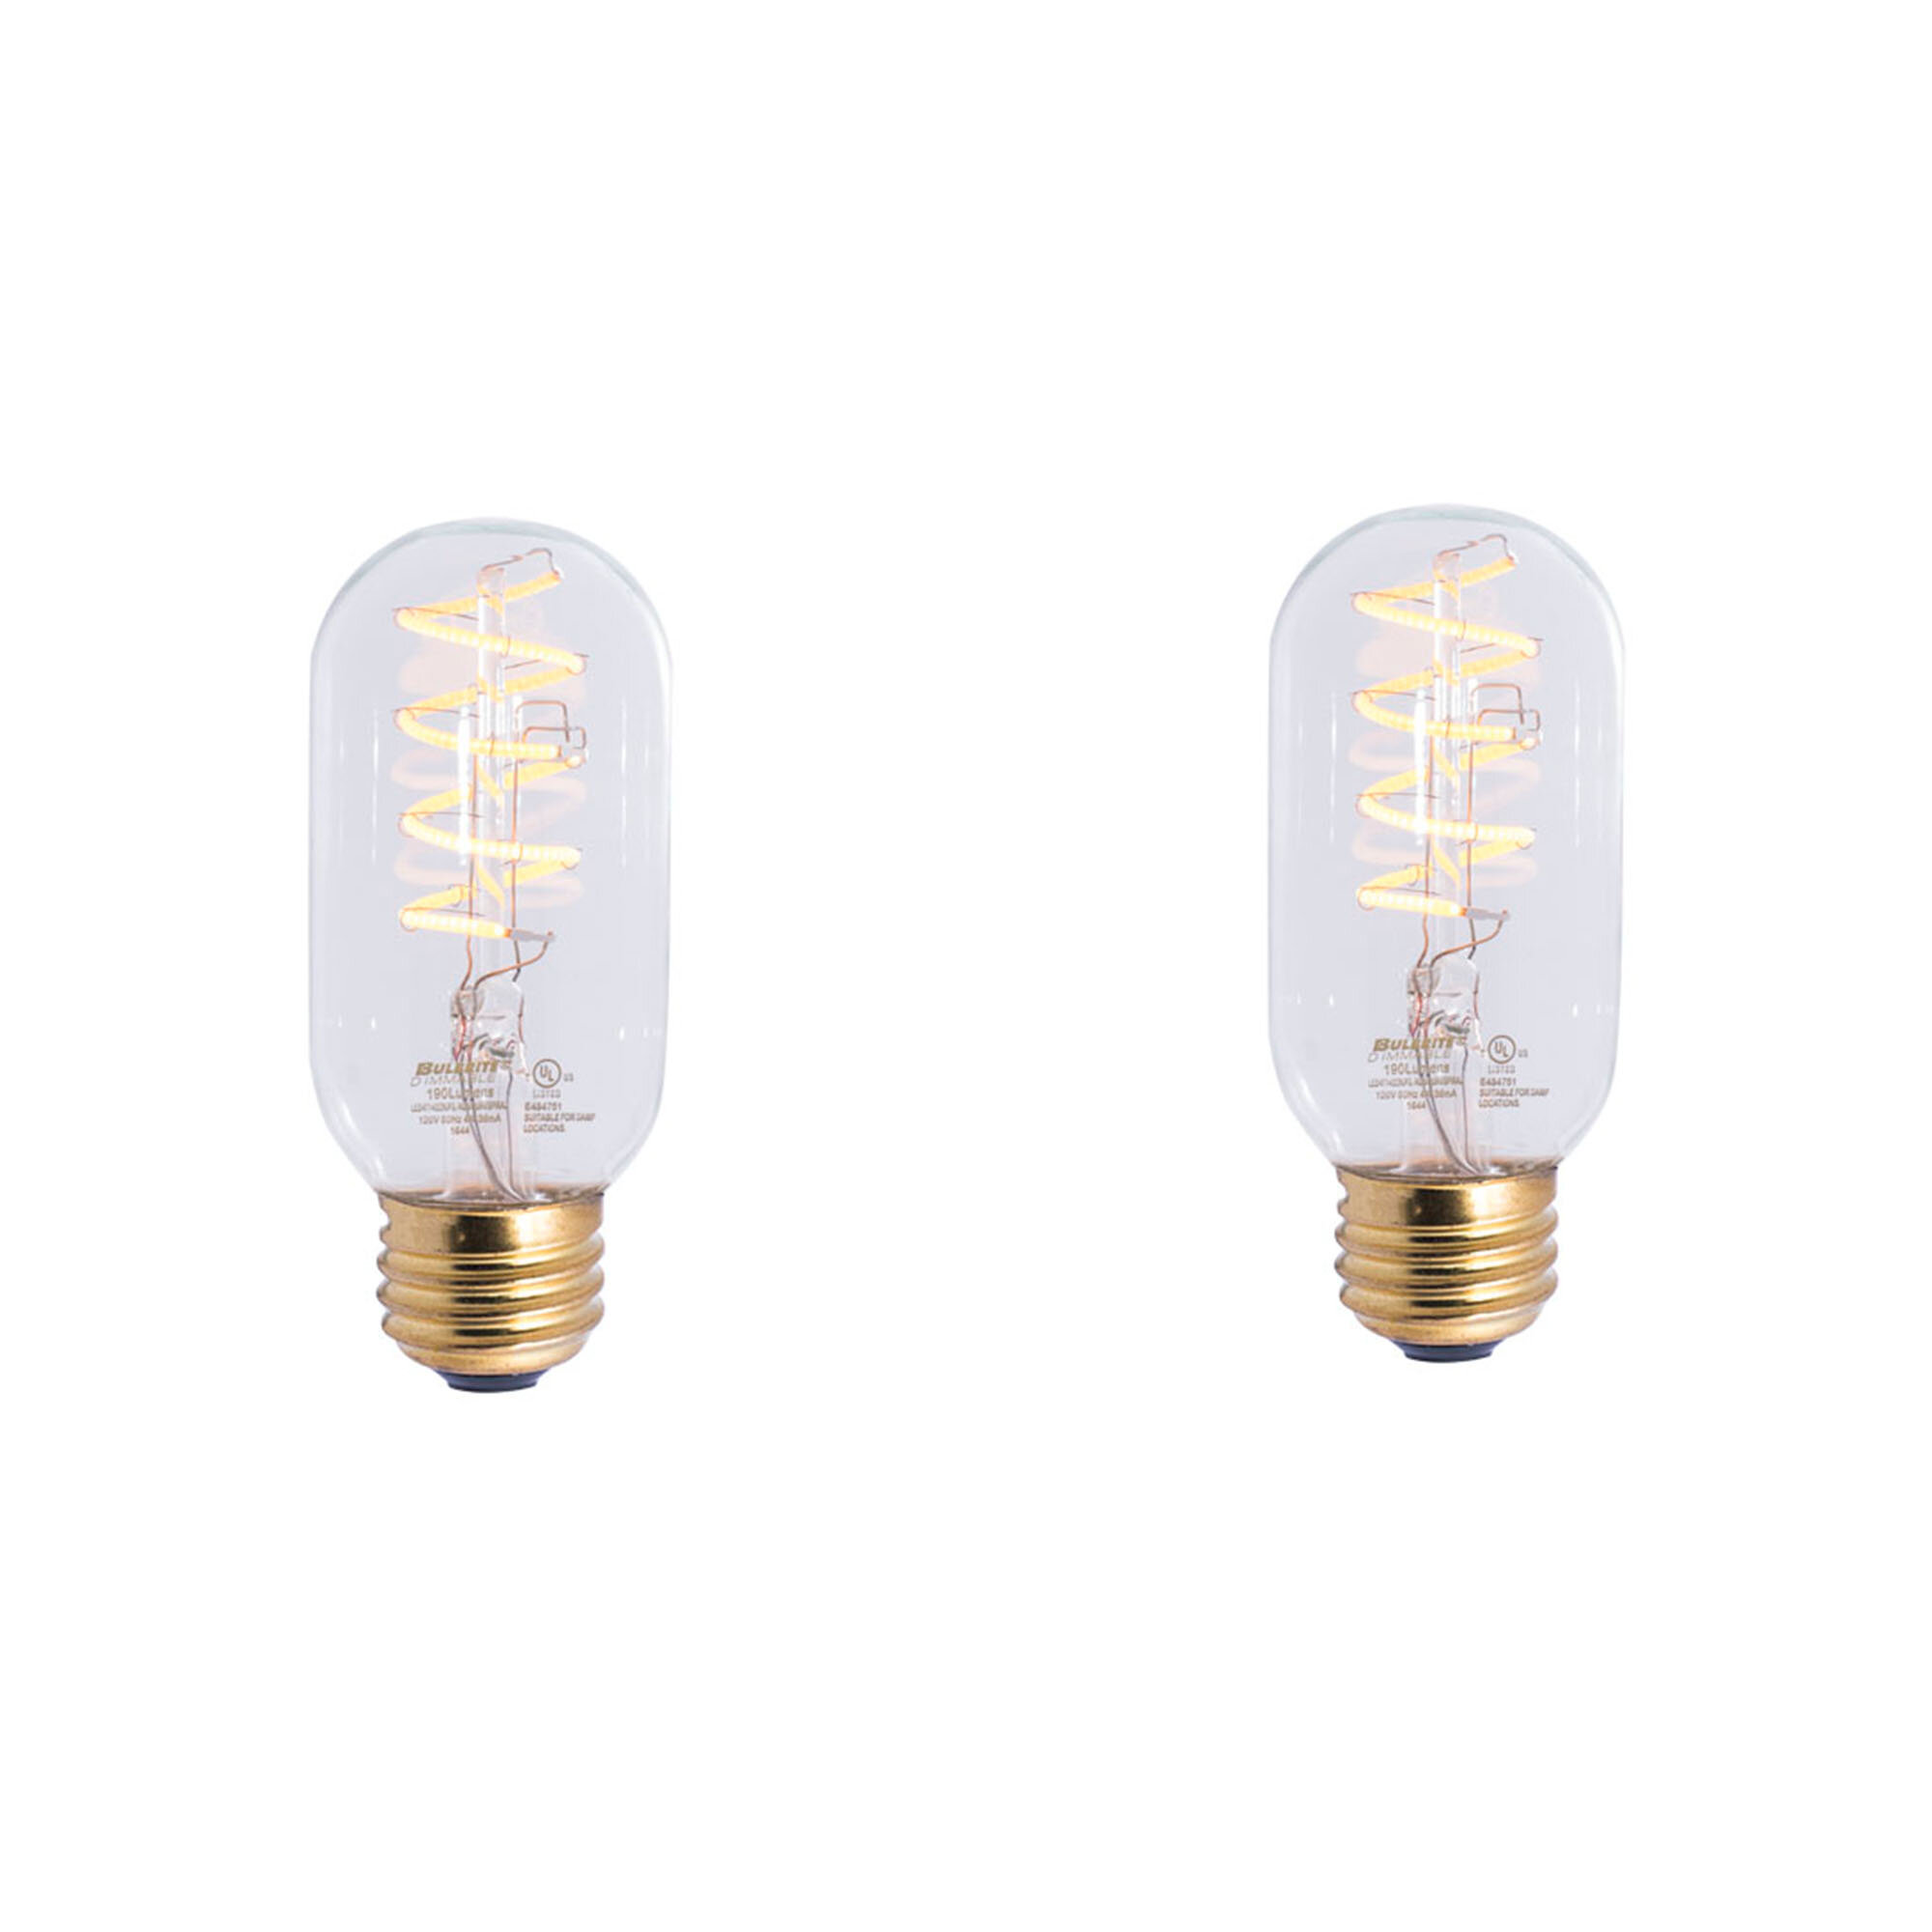 Bulbrite Industries 4W E26 Dimmable LED Stick Light Bulb